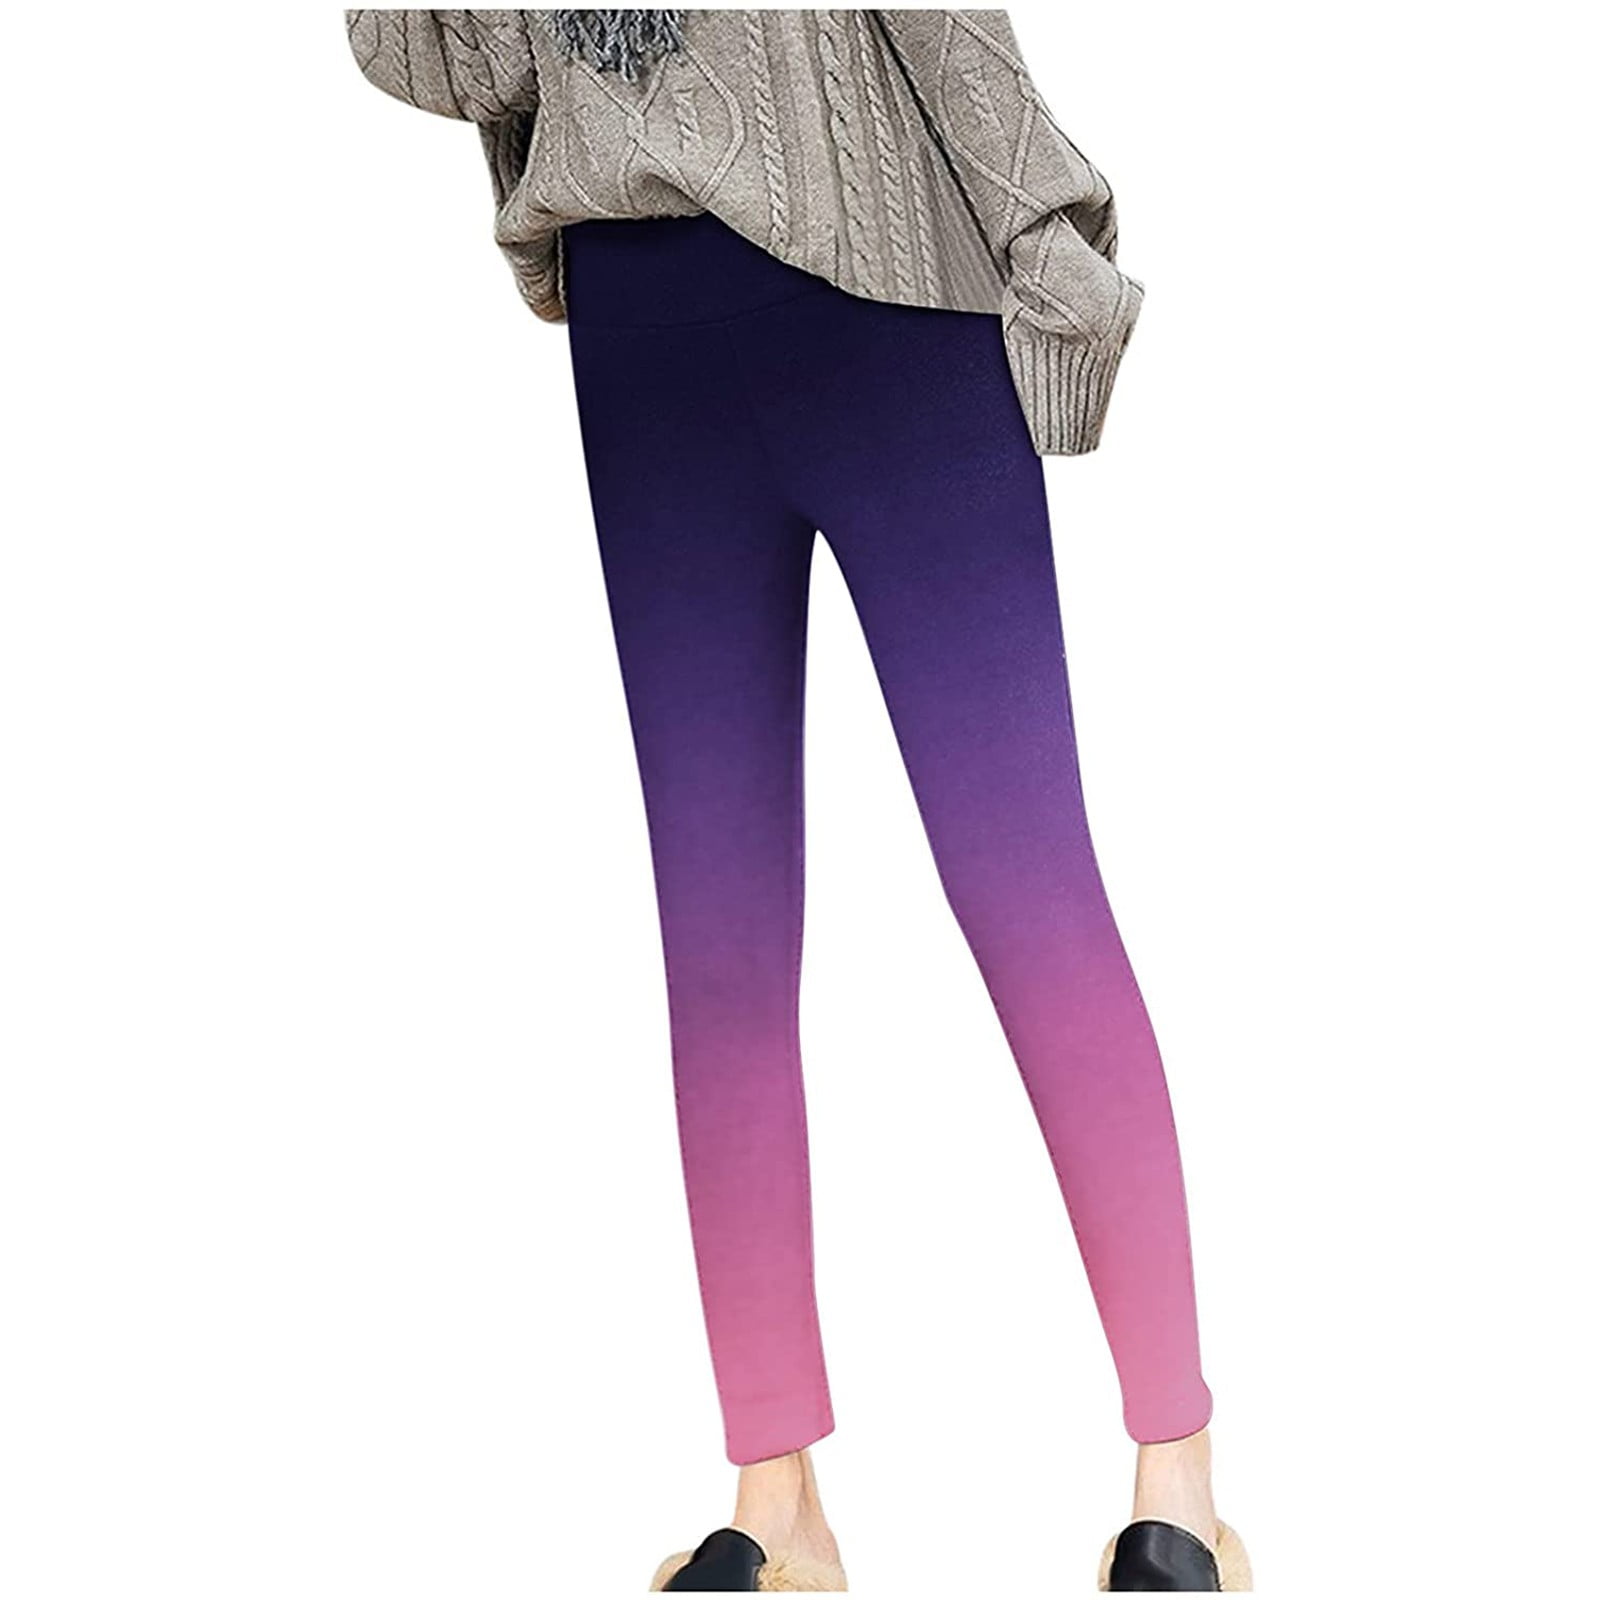 Umitay Fashion Women Solid Color Warm Winter Pants Keep Warm Leggings 